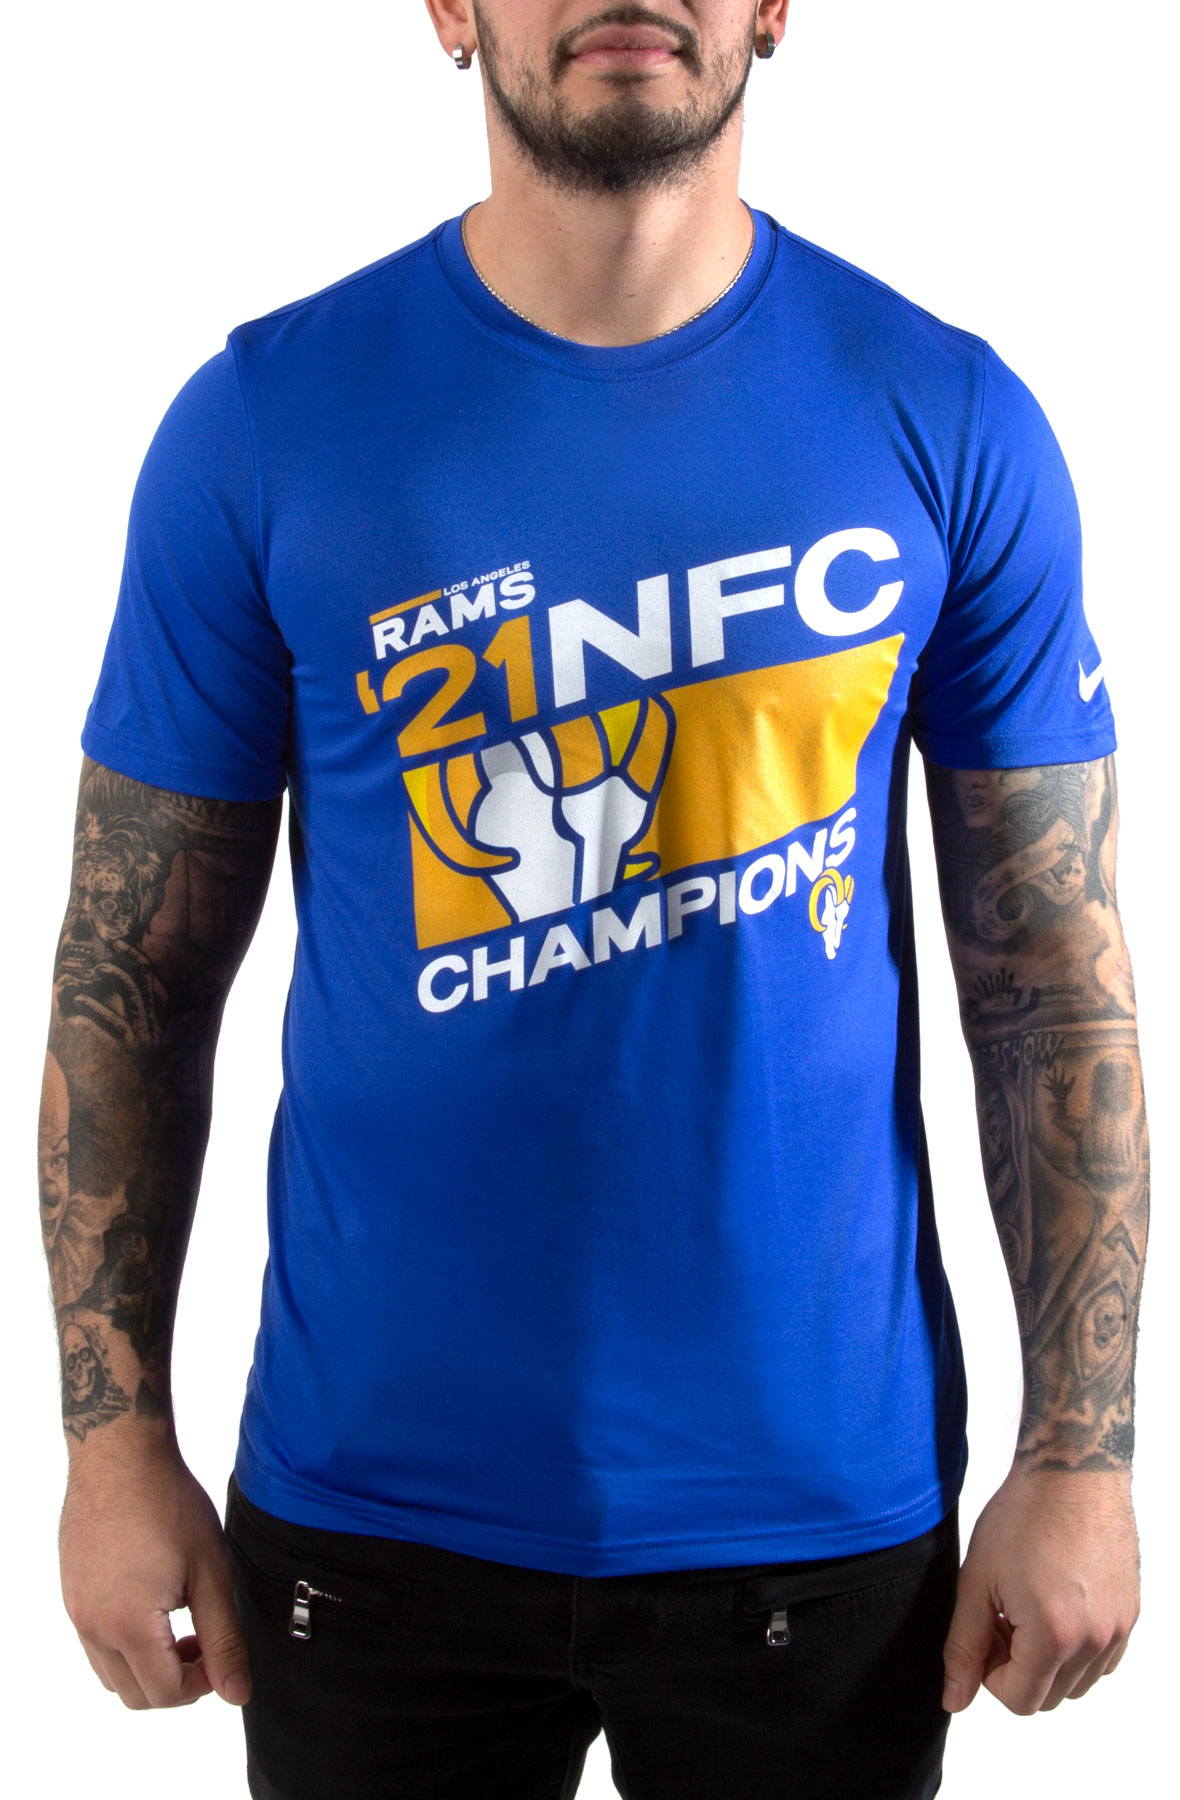 Nike 2021 NFC Champions Team Slogan (NFL Los Angeles Rams) Women's T-Shirt.